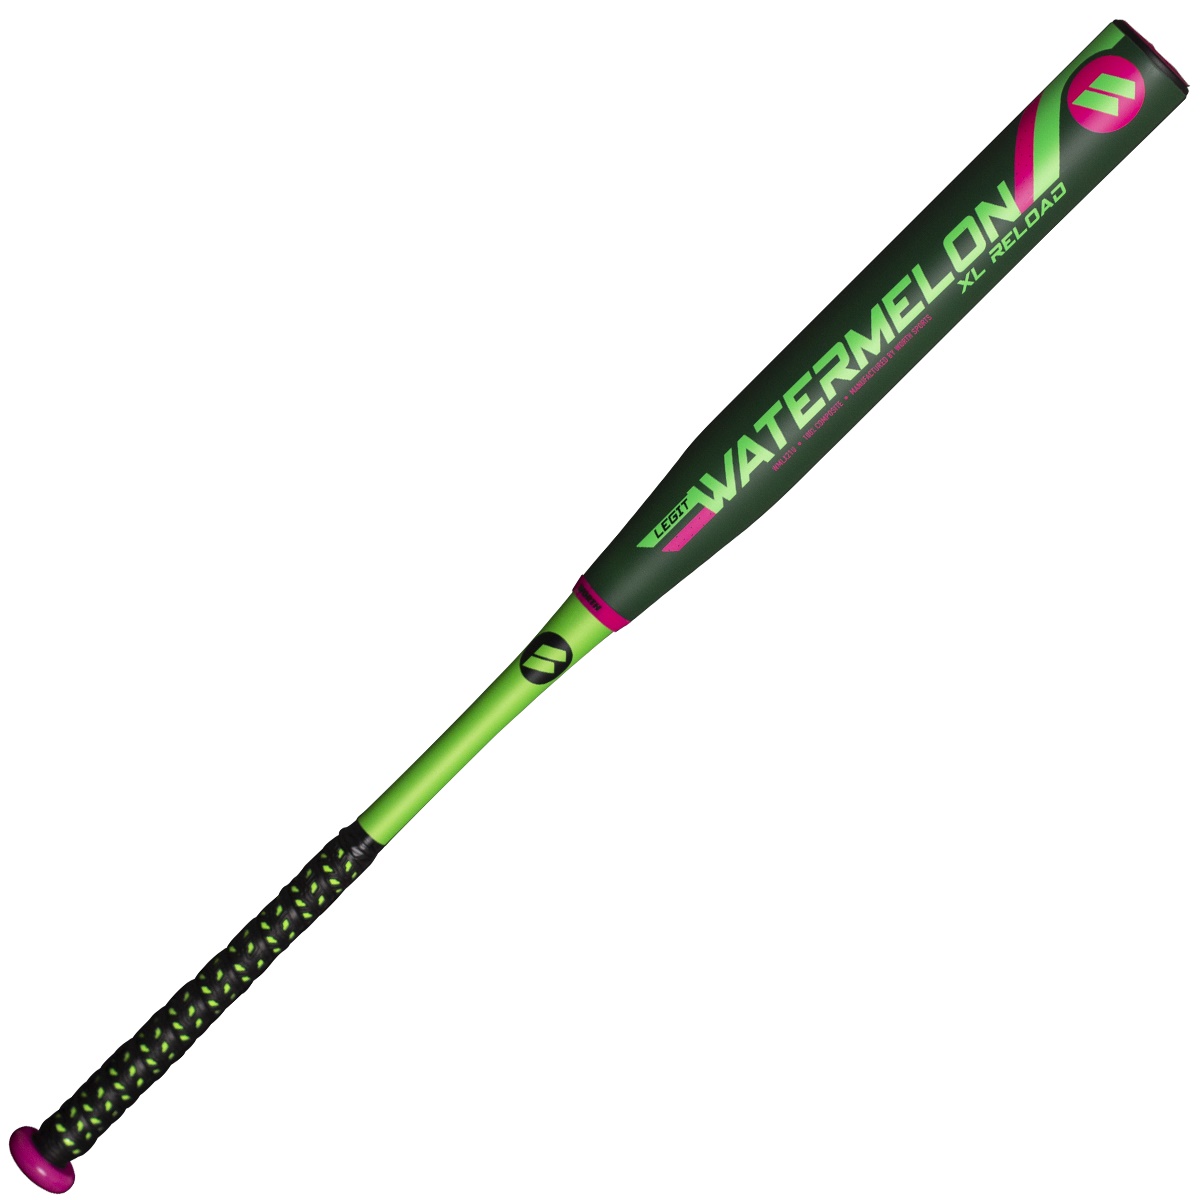 worth-legit-watermelon-xl-12-75-2pc-usssa-slowpitch-softball-bat-34-inch-27-5-oz-wmlx21u WMLX21U-3-275 Worth 043365361033 <span>X434 Carbon – </span><span>The X434 Barrel utilizes exclusive carbon fiber and advanced